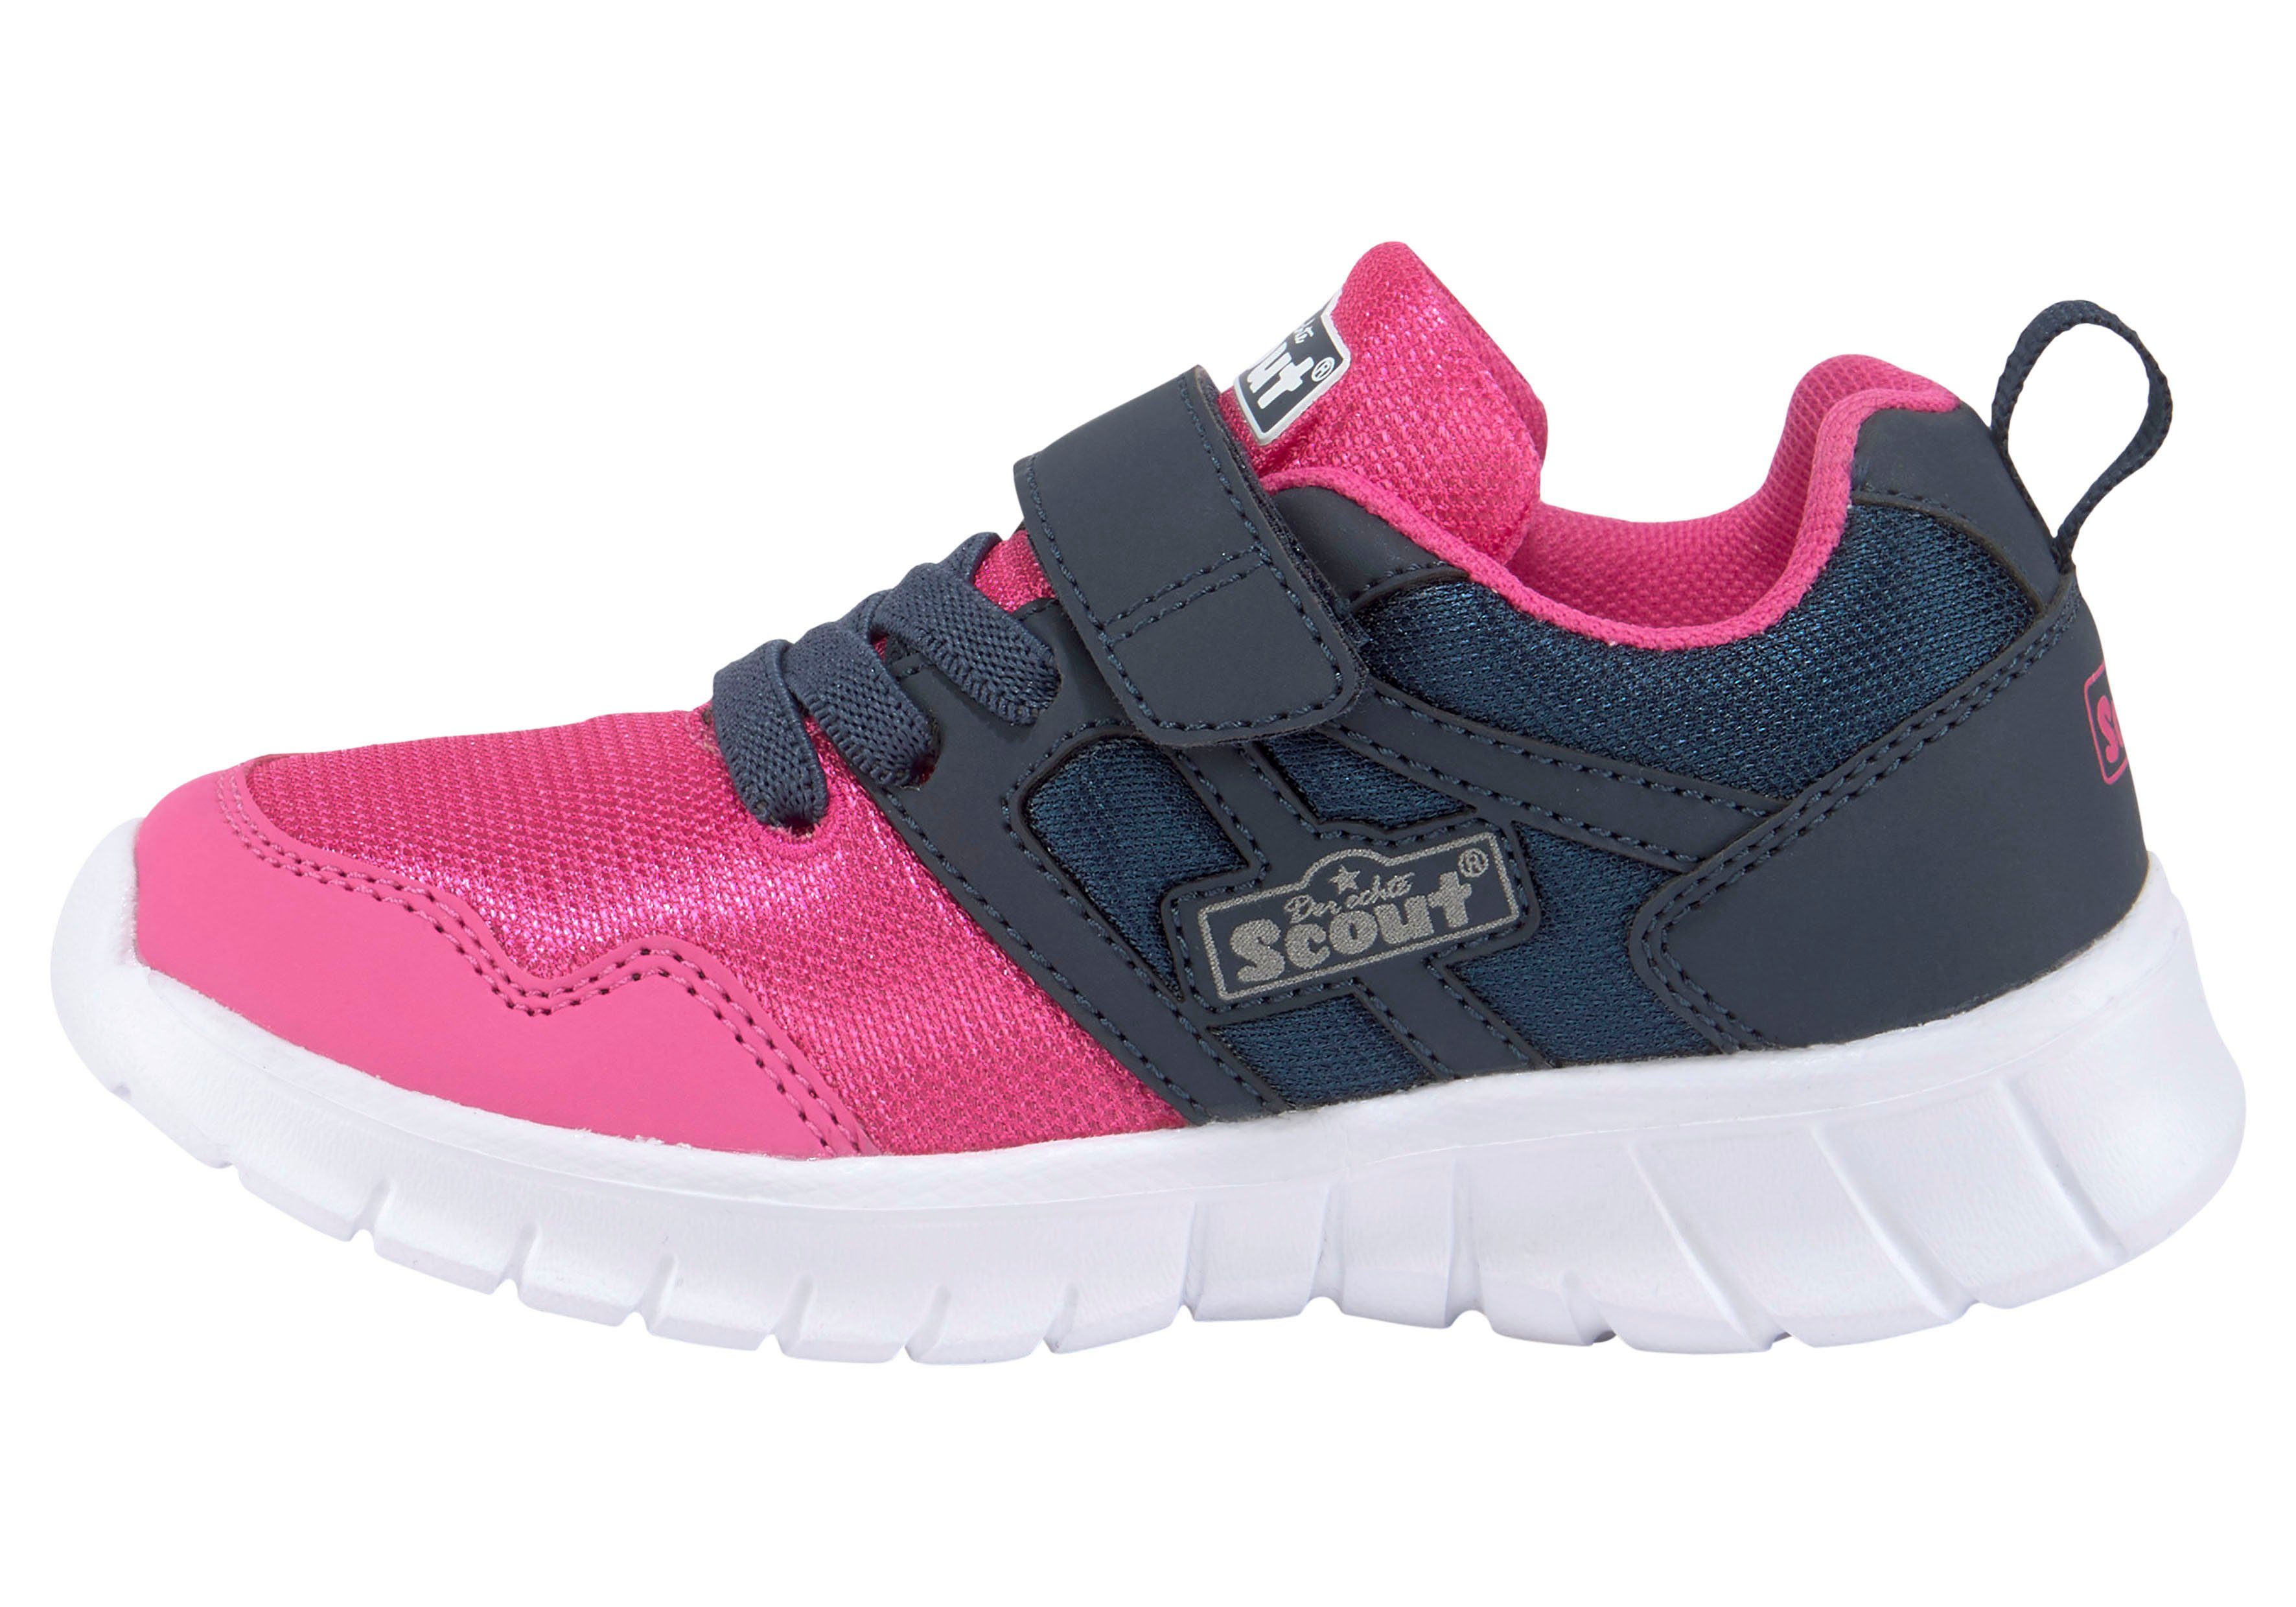 navy-pink Flow Scout Sneaker